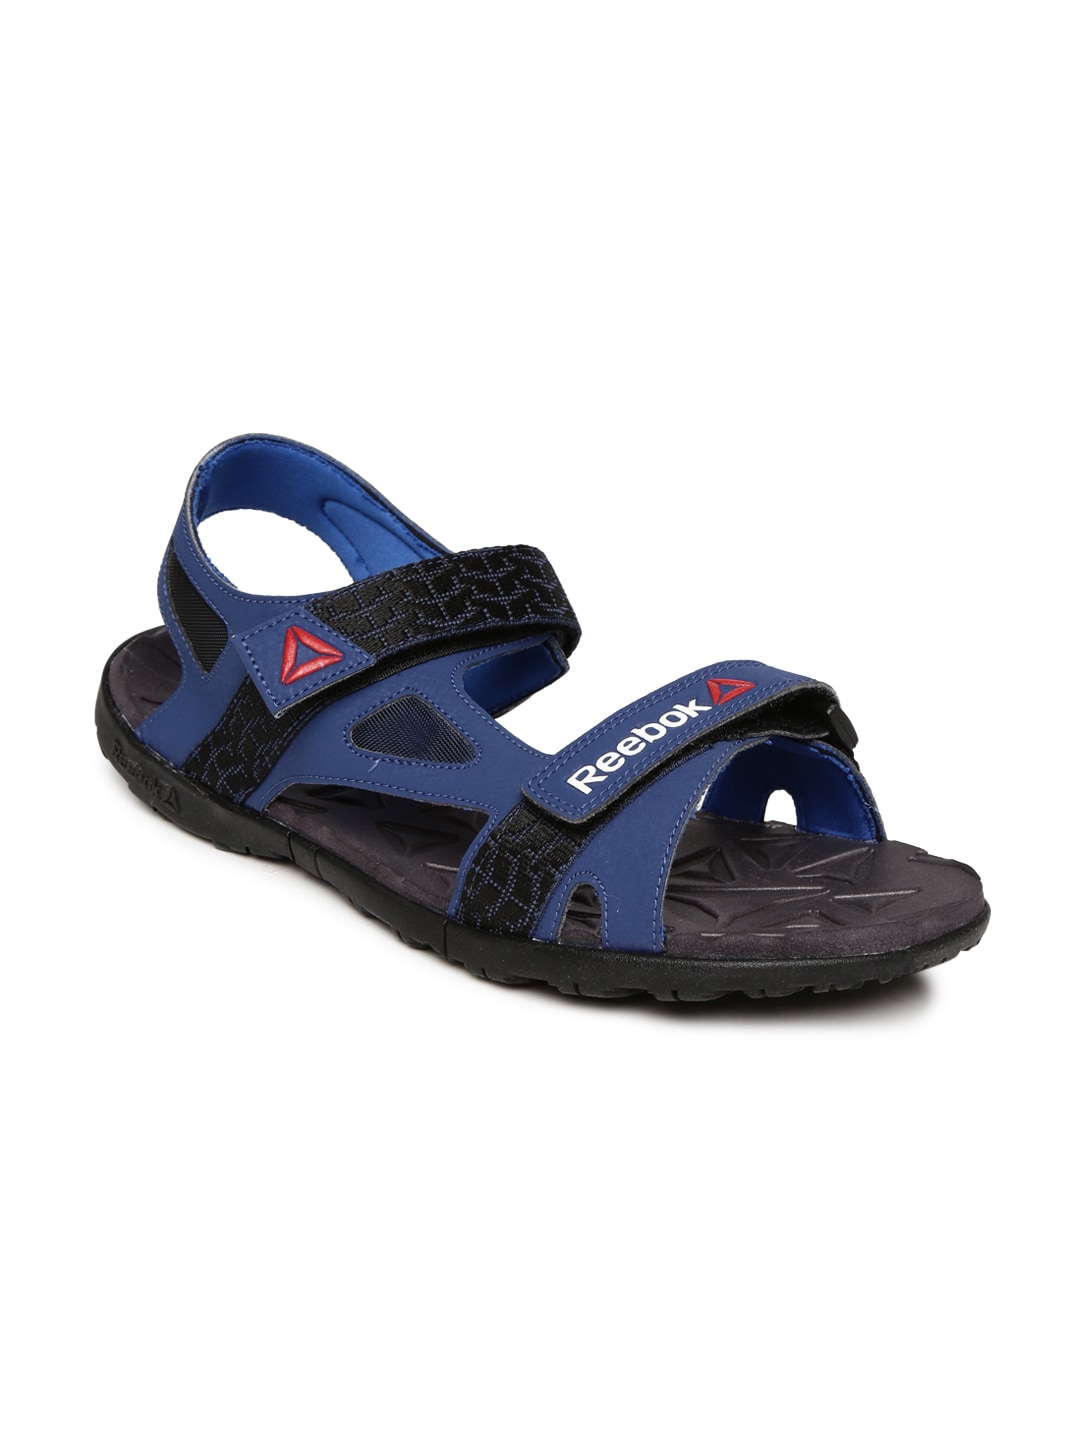 reebok slippers price in india - 60 